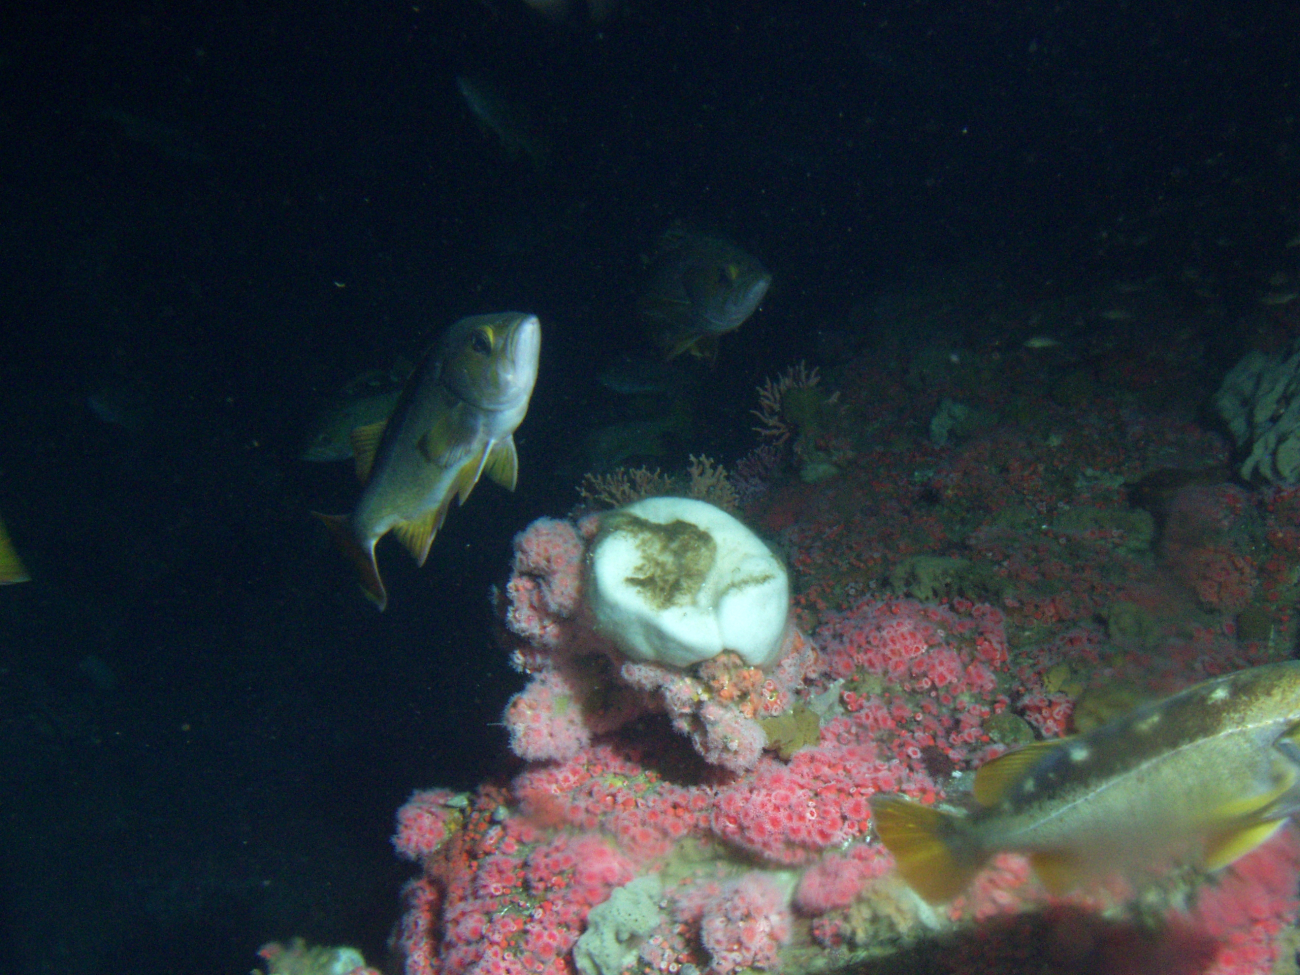 Yellowtail Rockfish (Sebastes flavidus) school on rocky reef habitatat 65 meters depth